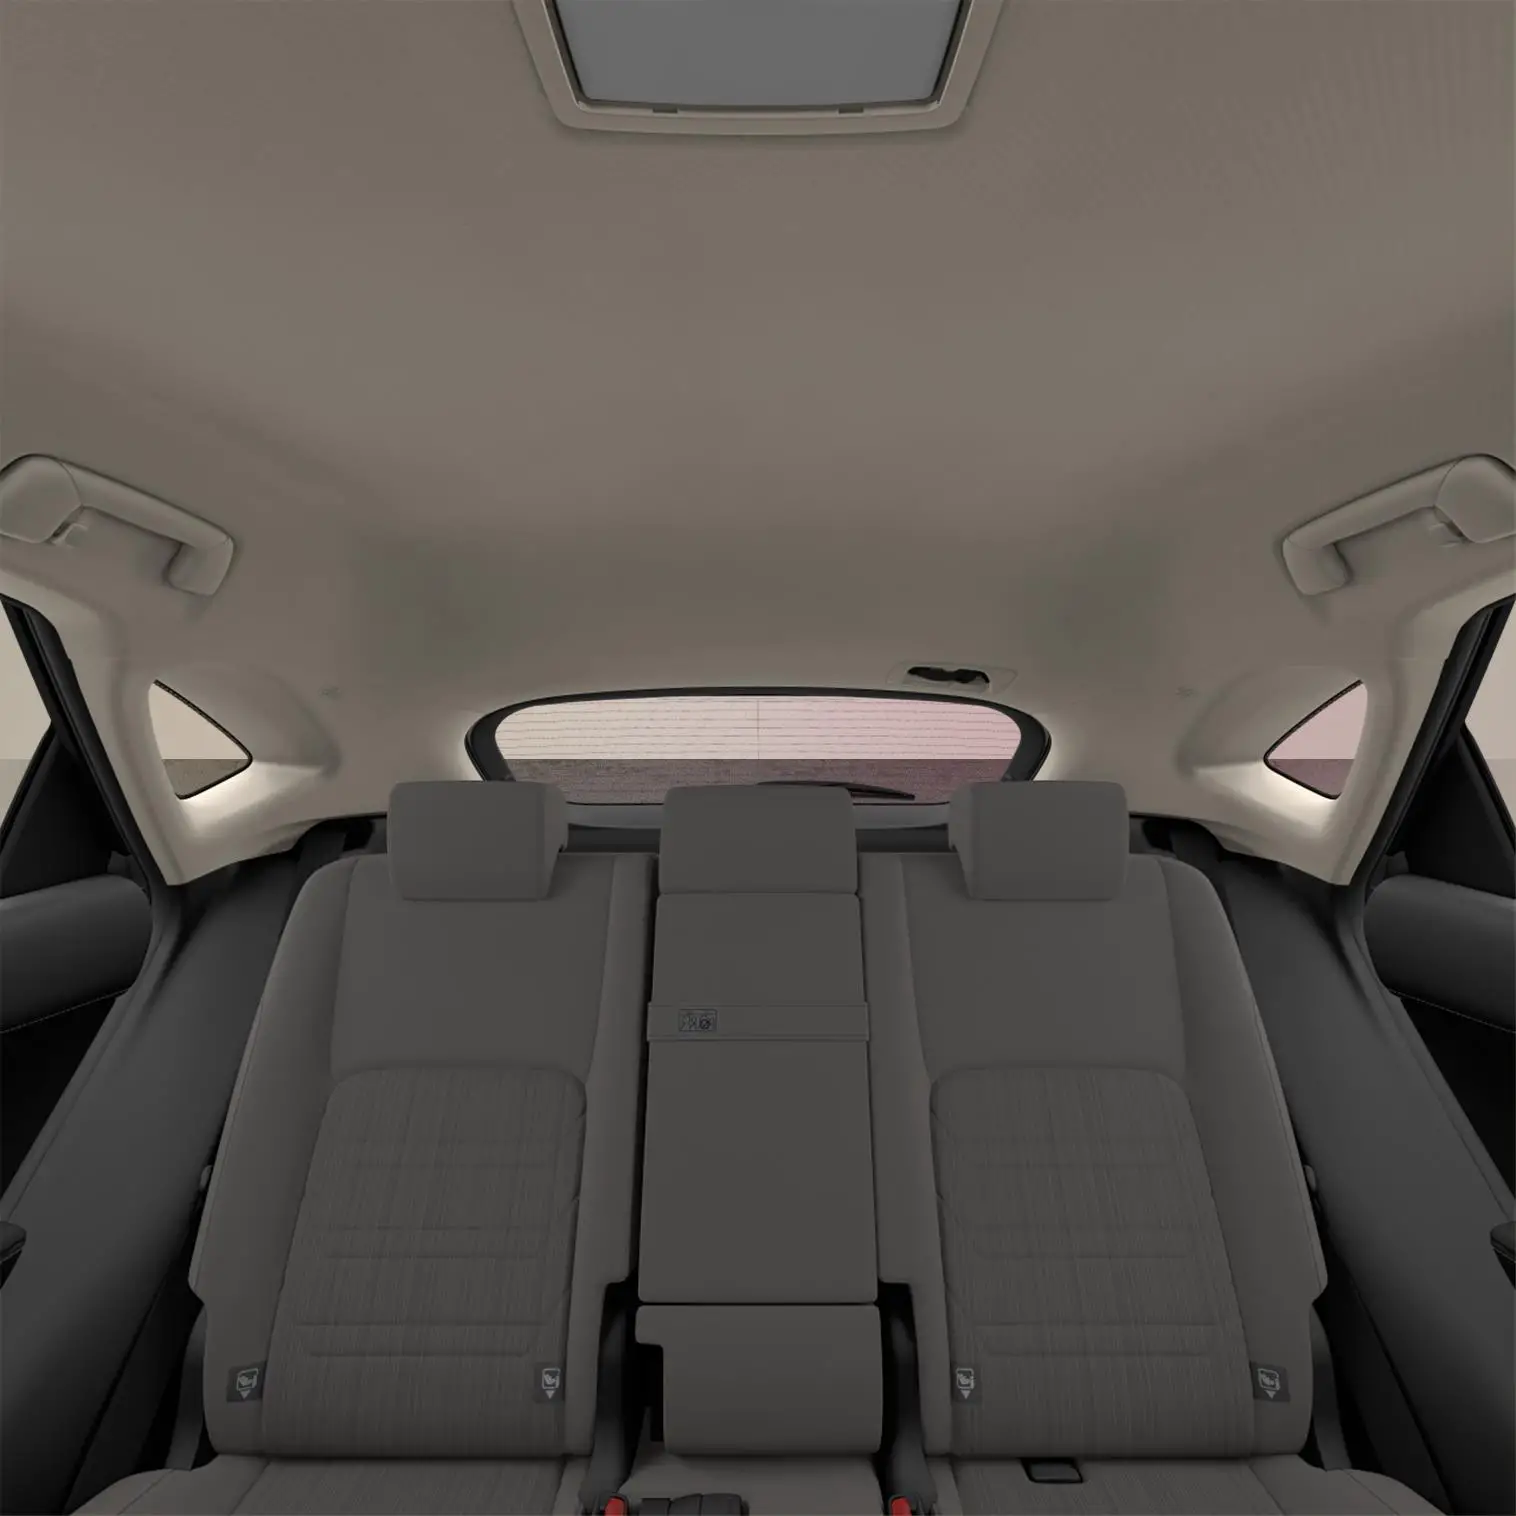 Lexus NX 300h S interior rear seat view